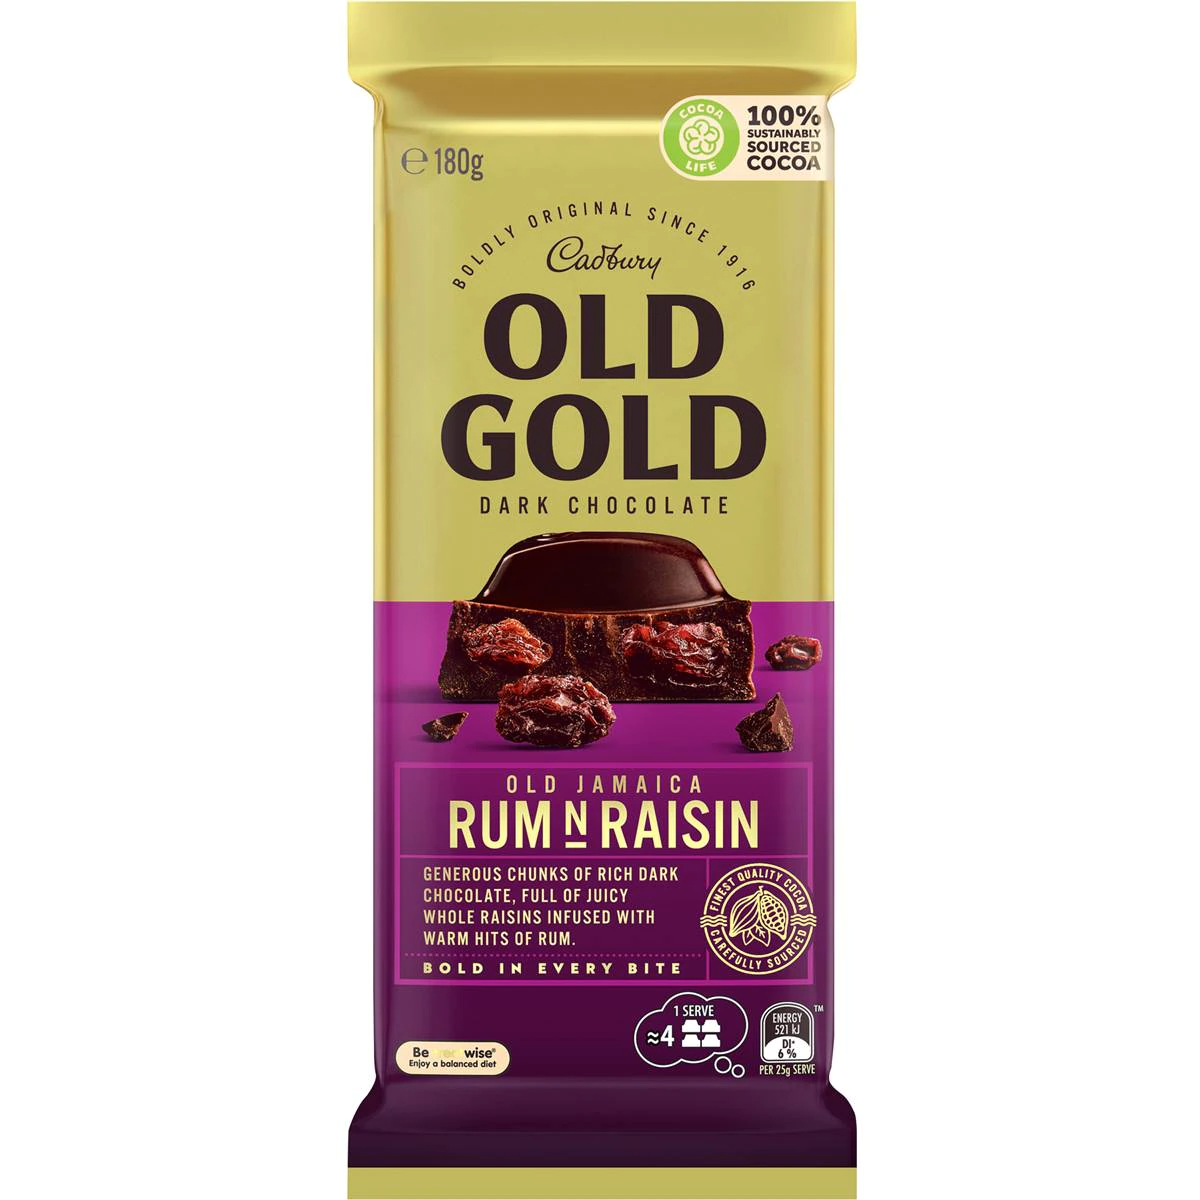 Old Gold Dark Chocolate - Rum & Raisin